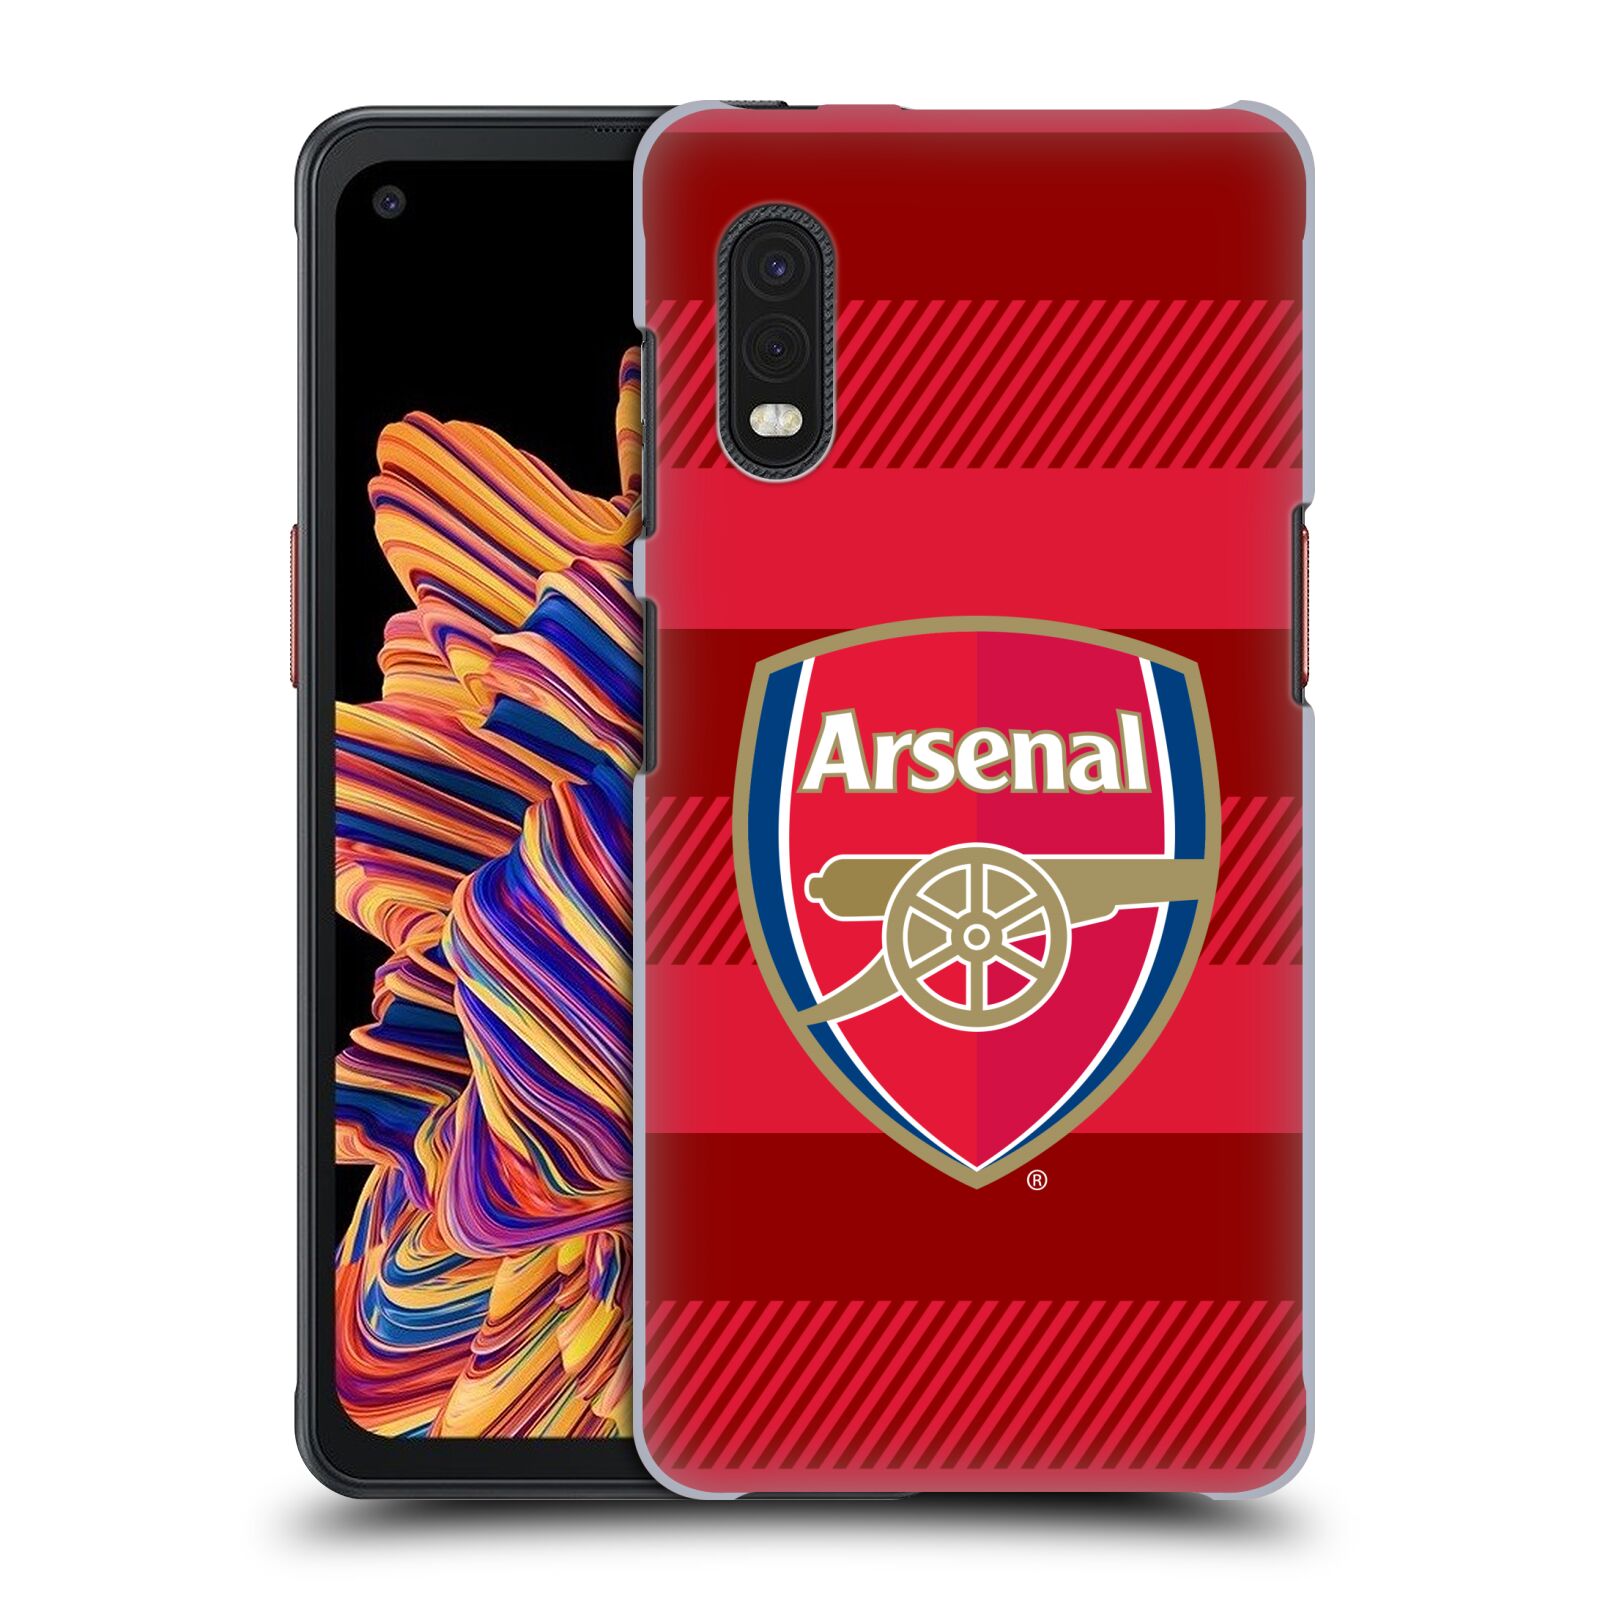 Plastové pouzdro na mobil Samsung Galaxy Xcover Pro - Head Case - Arsenal FC - Logo s pruhy